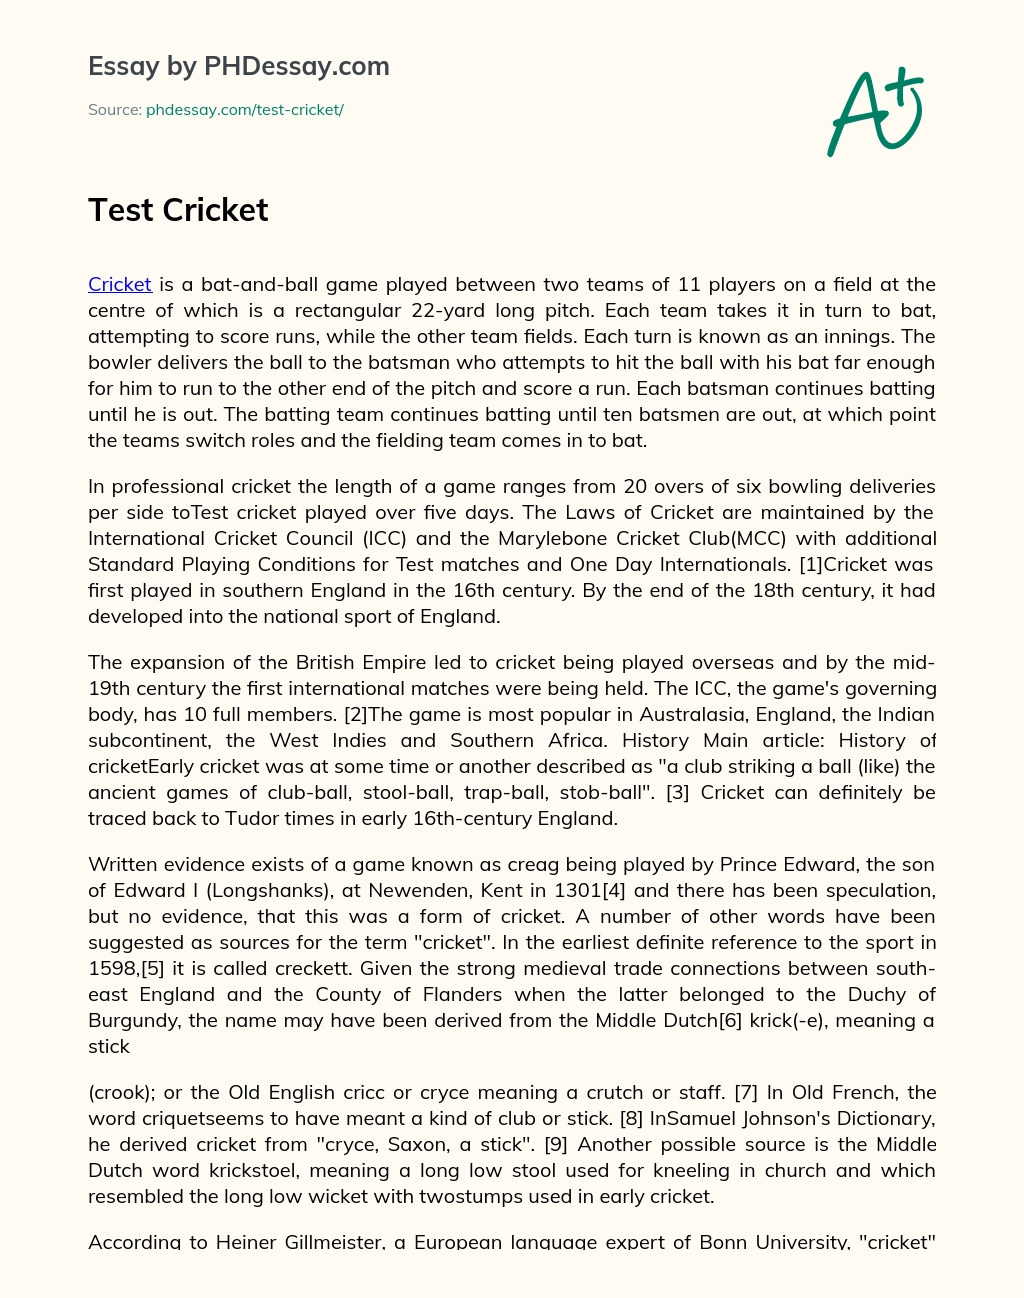 Test Cricket essay